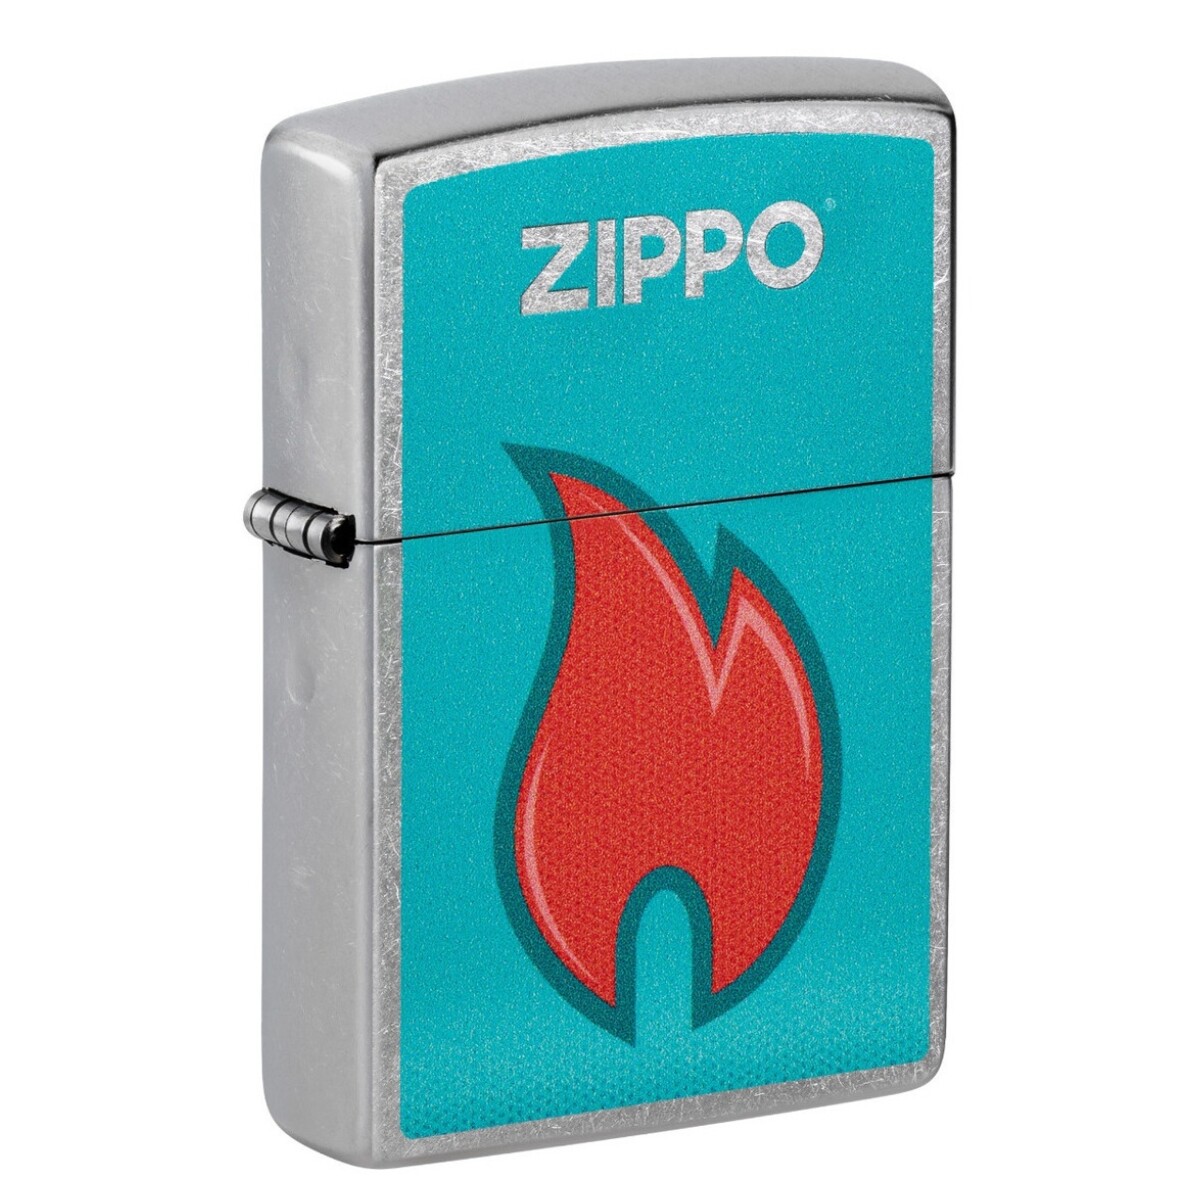 Encendedor Zippo Flame Design - 48495 